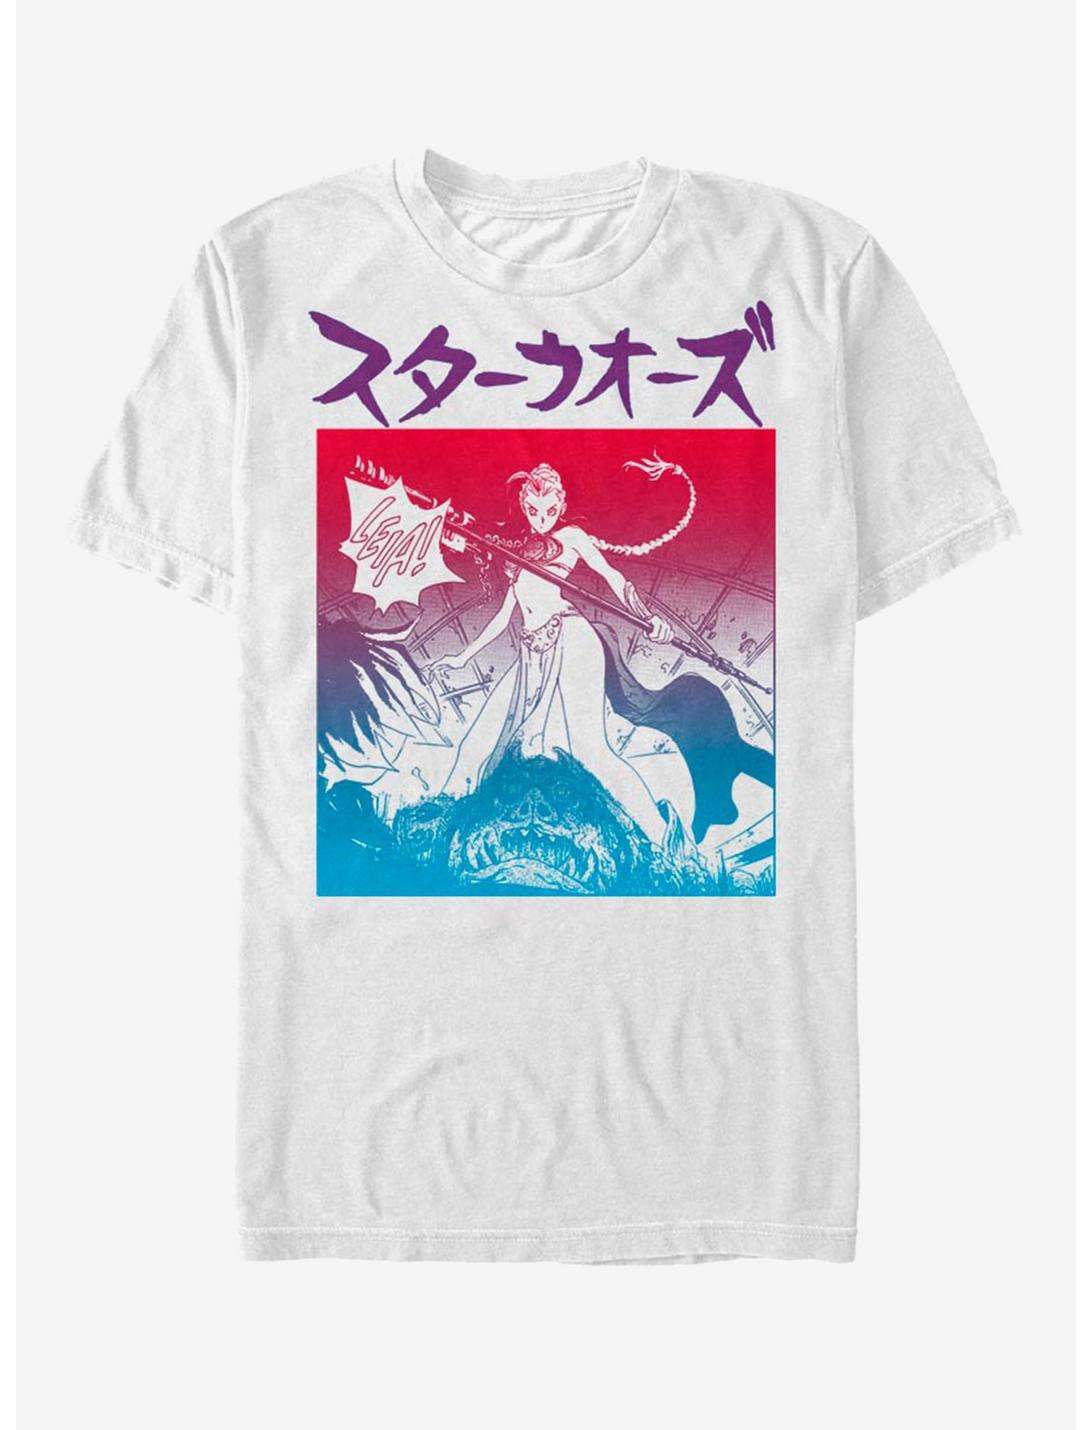 Star Wars Anime Slayea T-Shirt, WHITE, hi-res